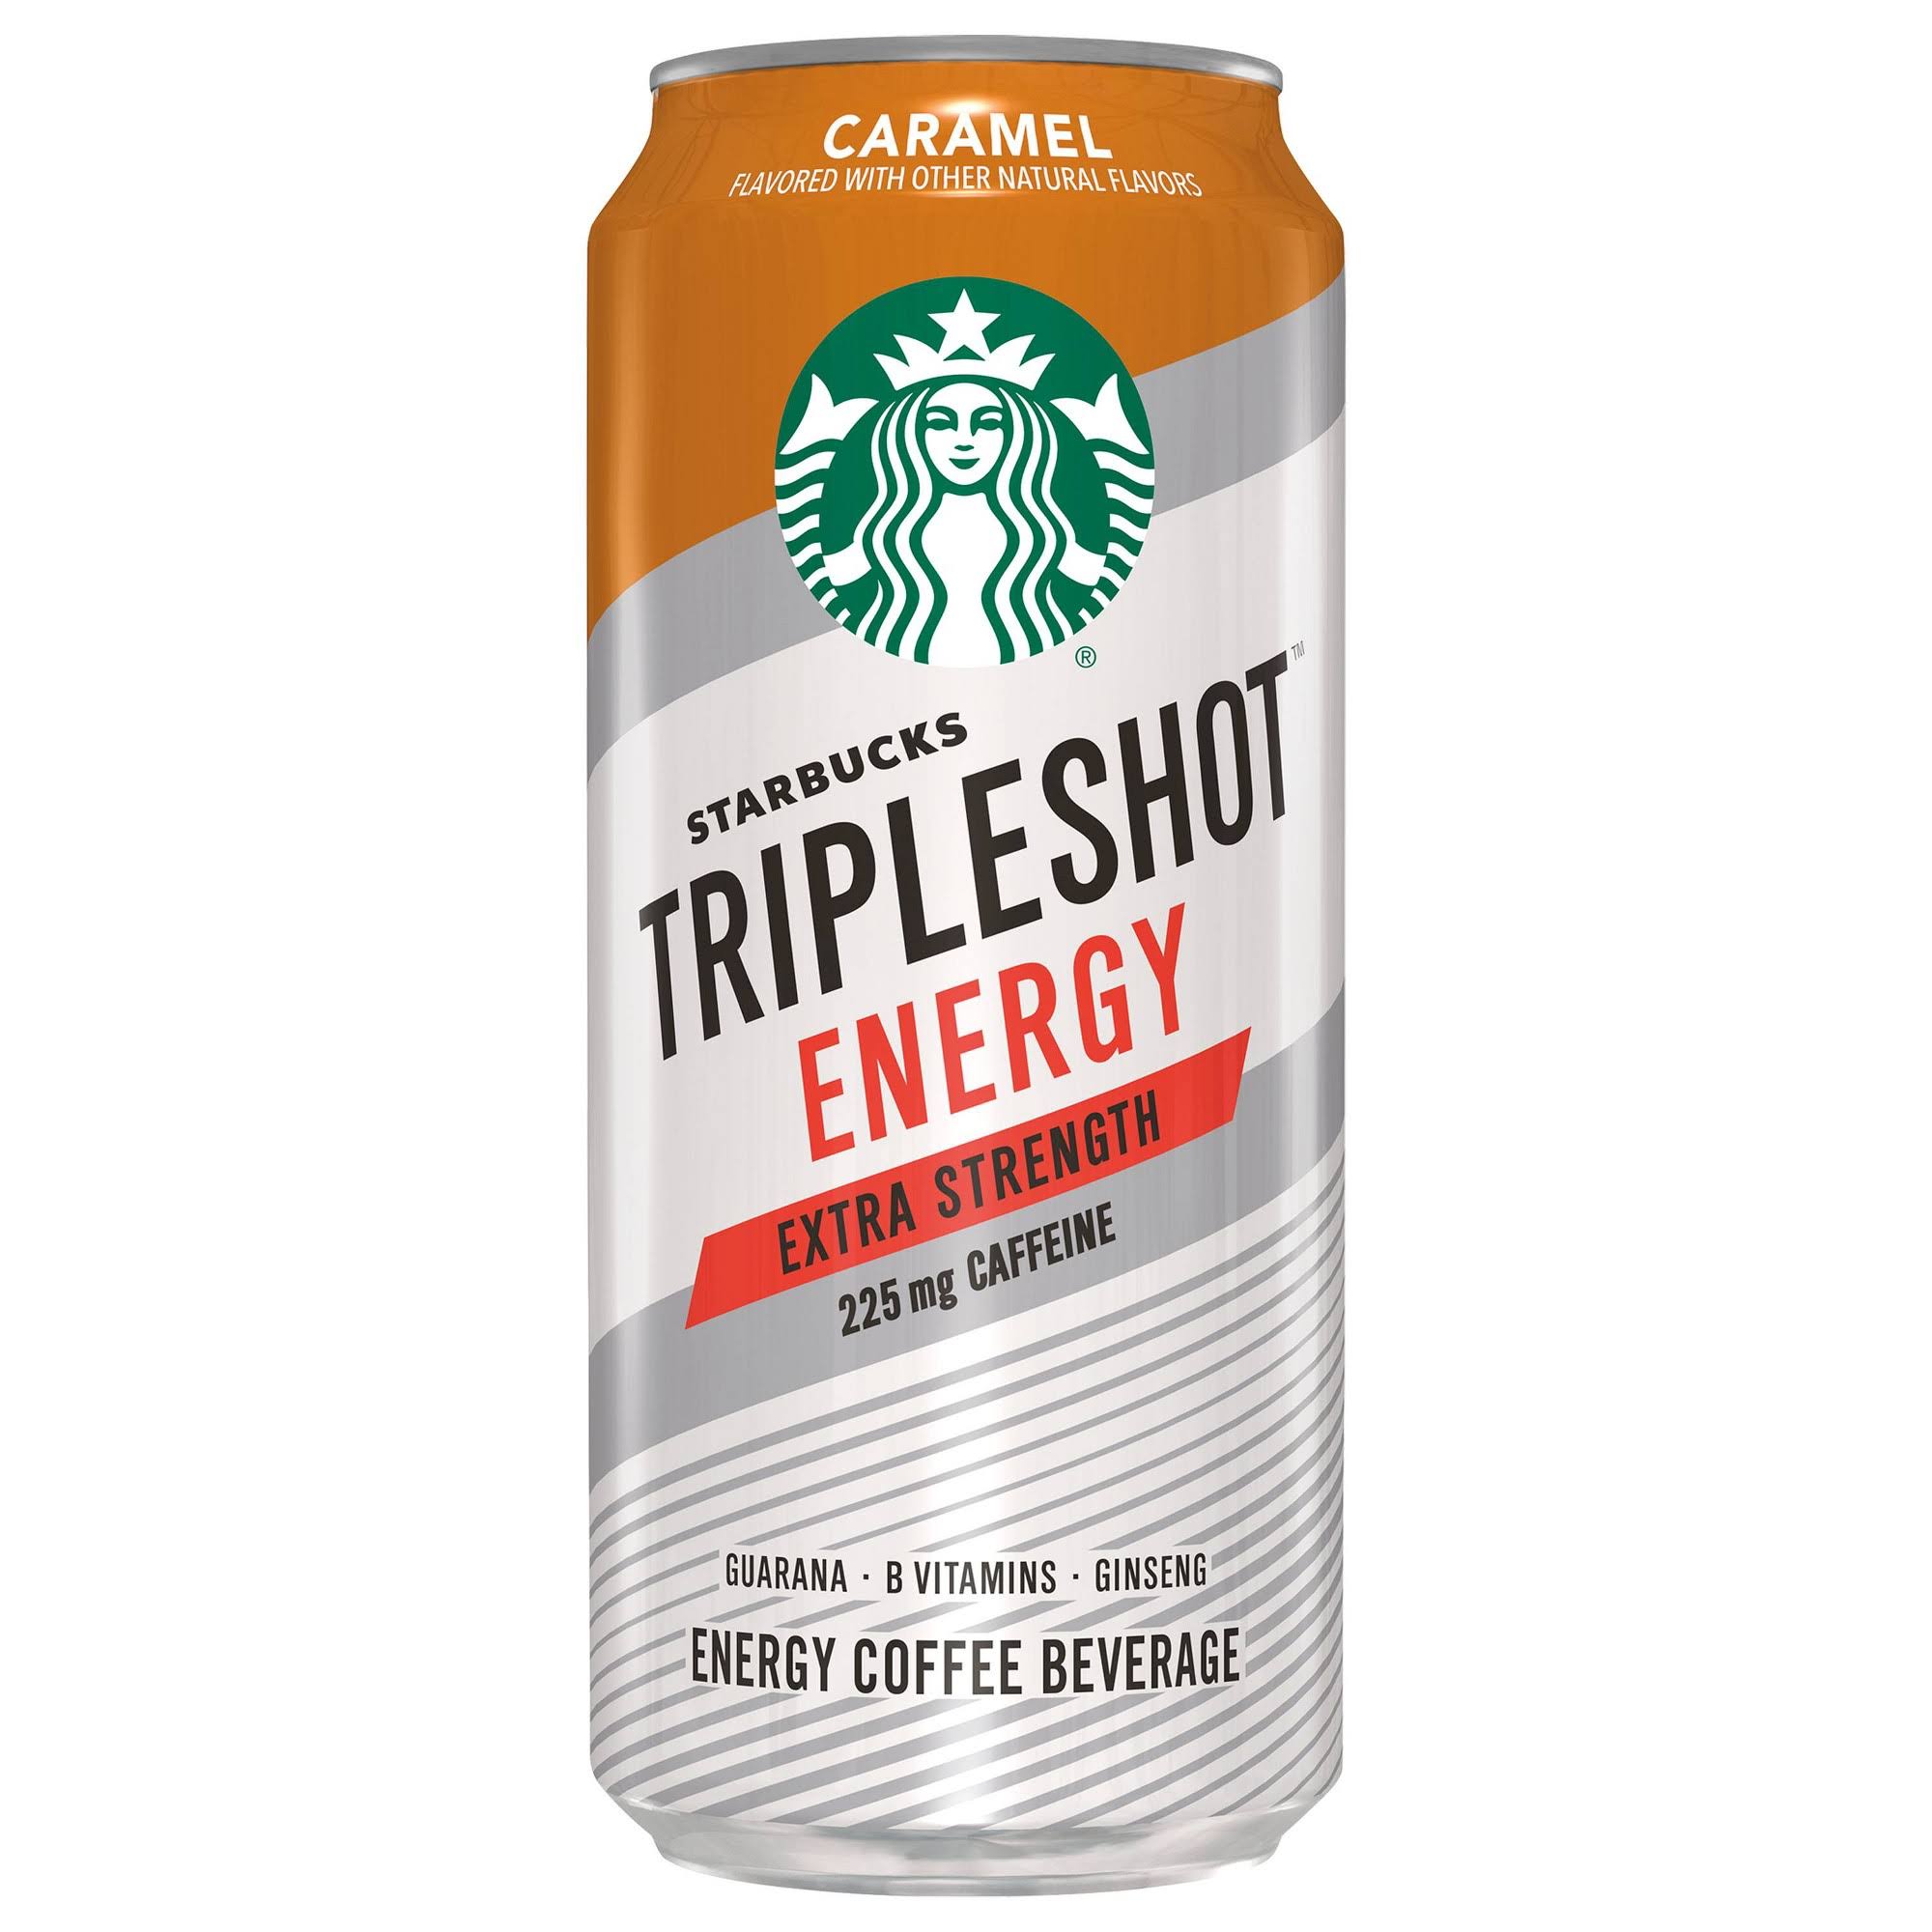 Starbucks Tripleshot Energy Extra Strength Energy Coffee Beverage - Caramel, 15oz